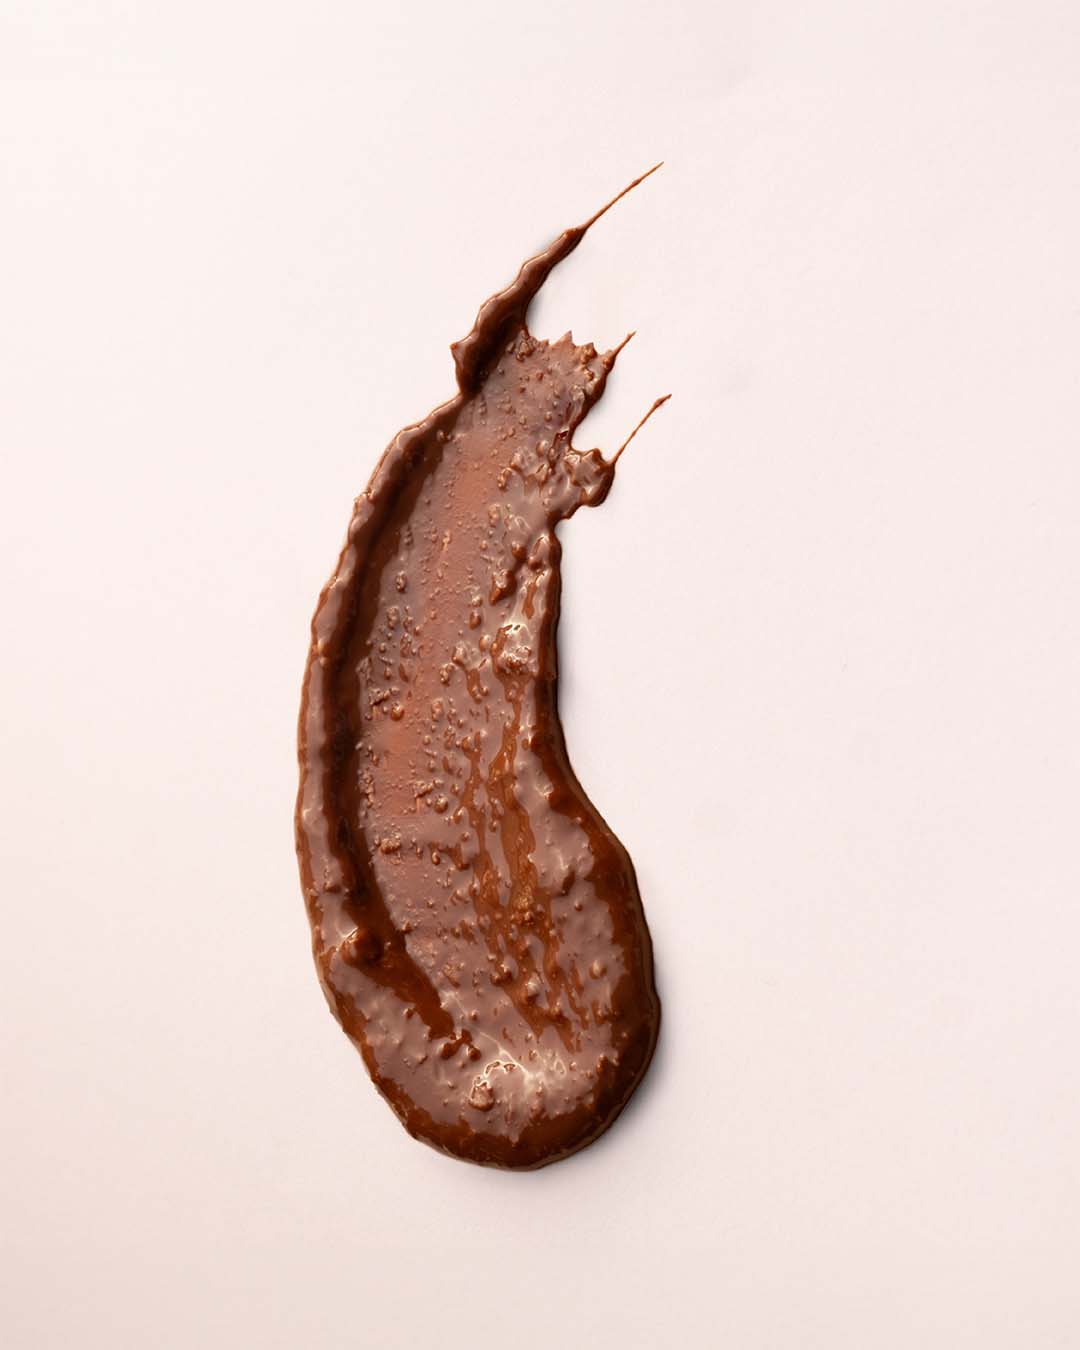 Crunchy Almond & Coffee Chocolate Spread - 45% Milk